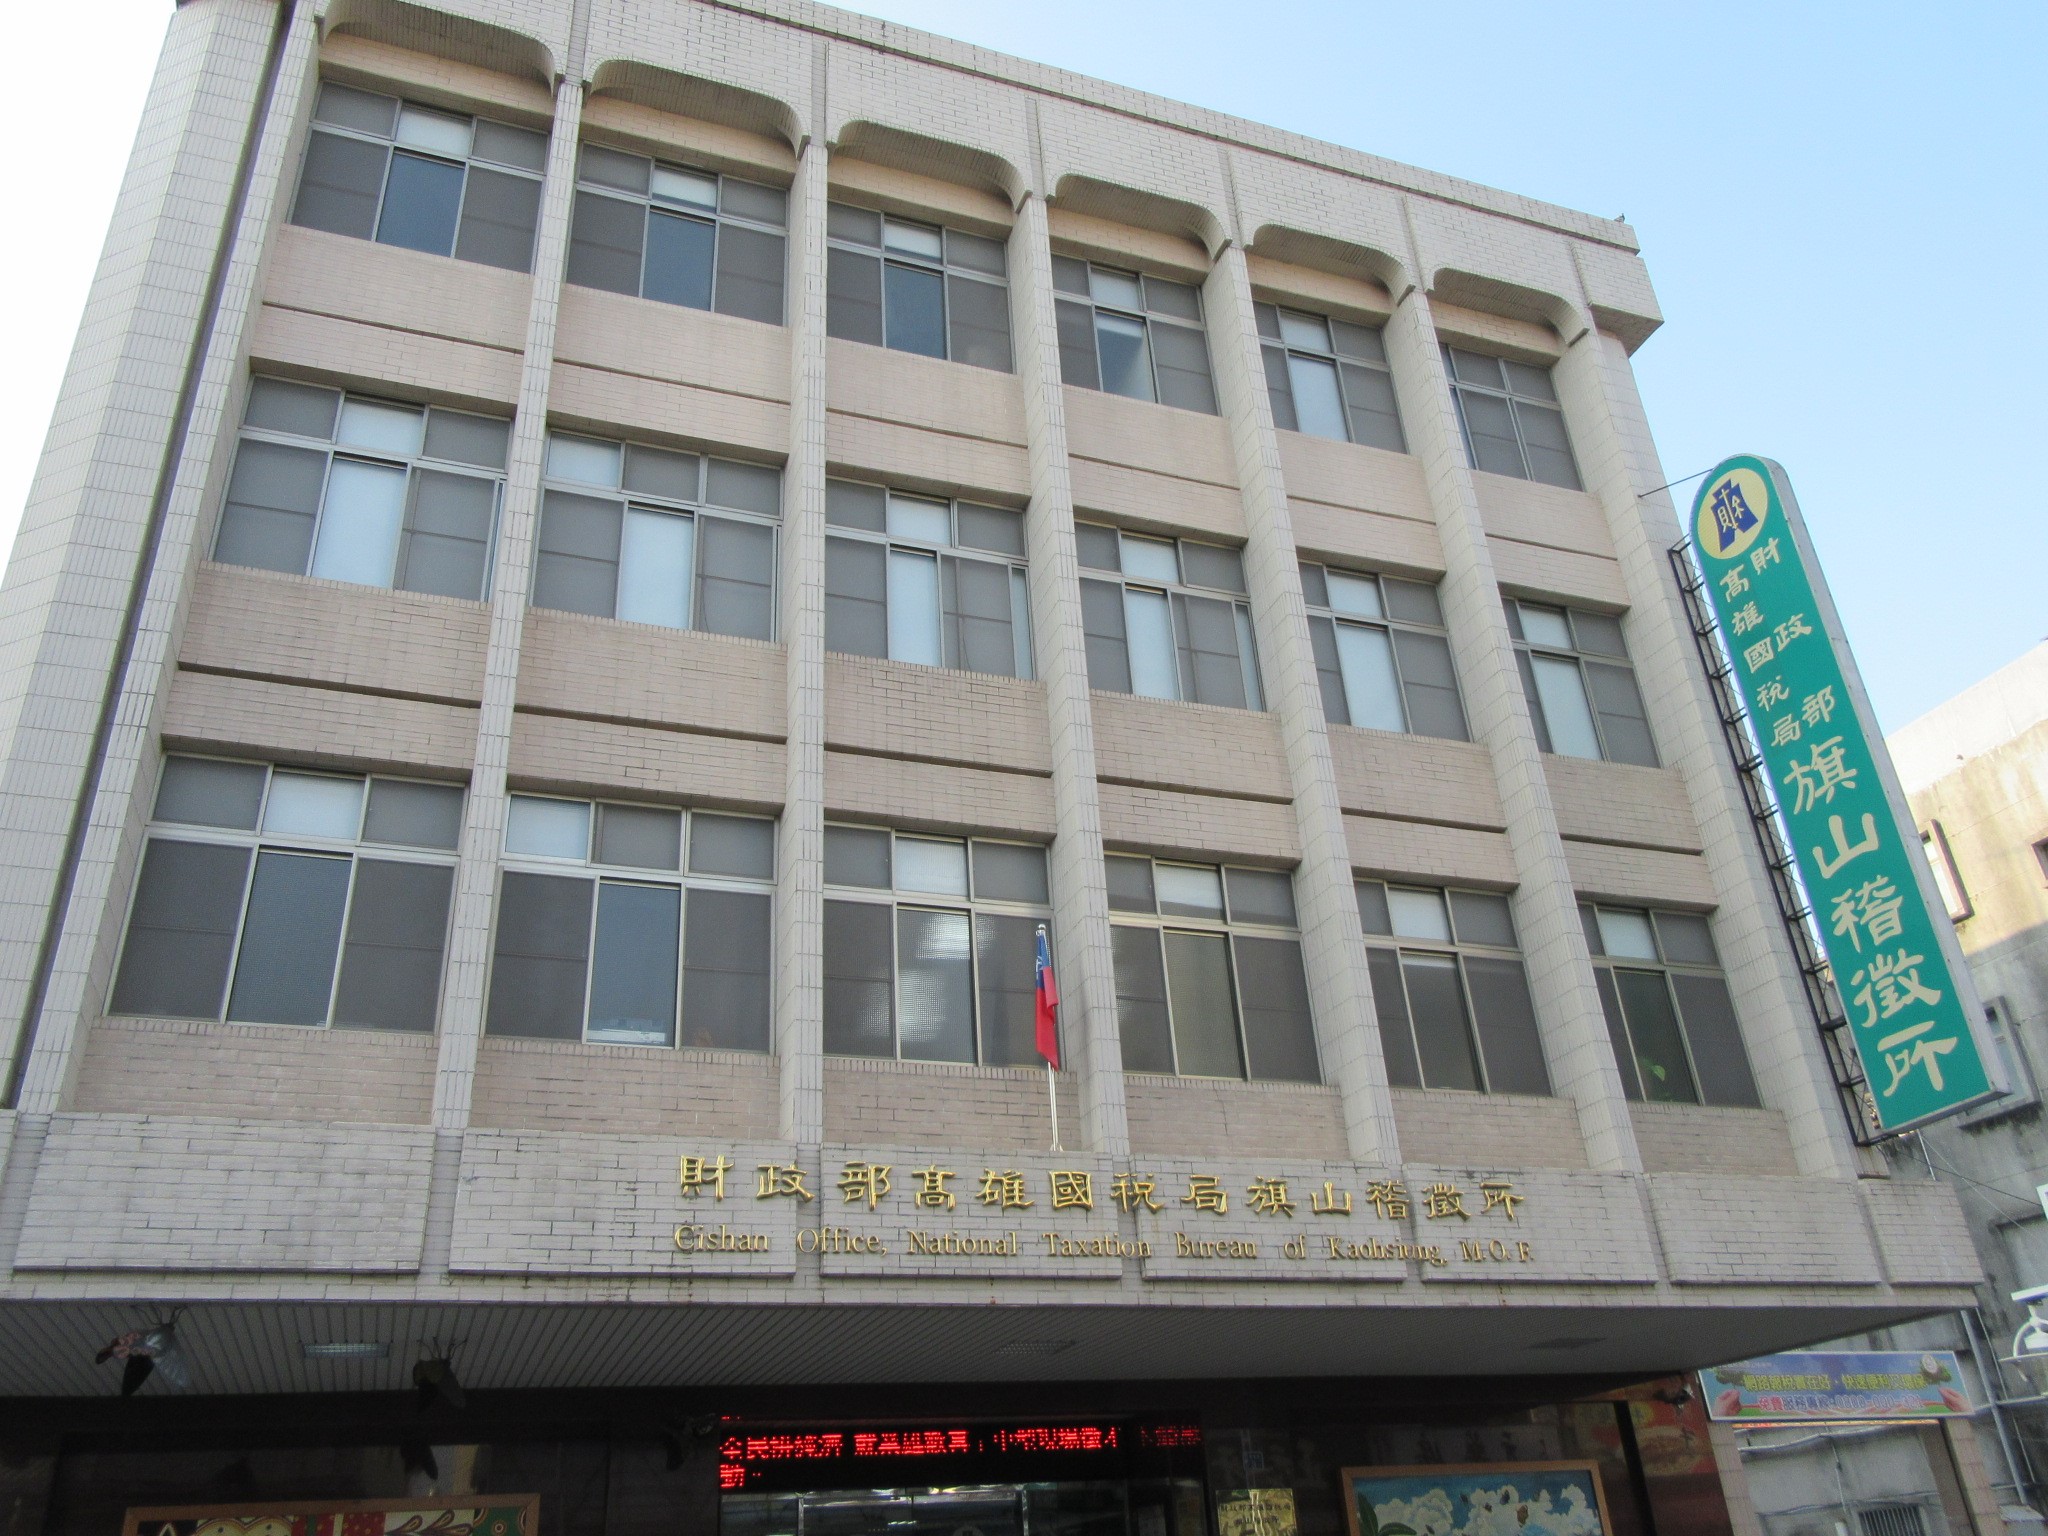 Front Photo of Cishan Office.jpg